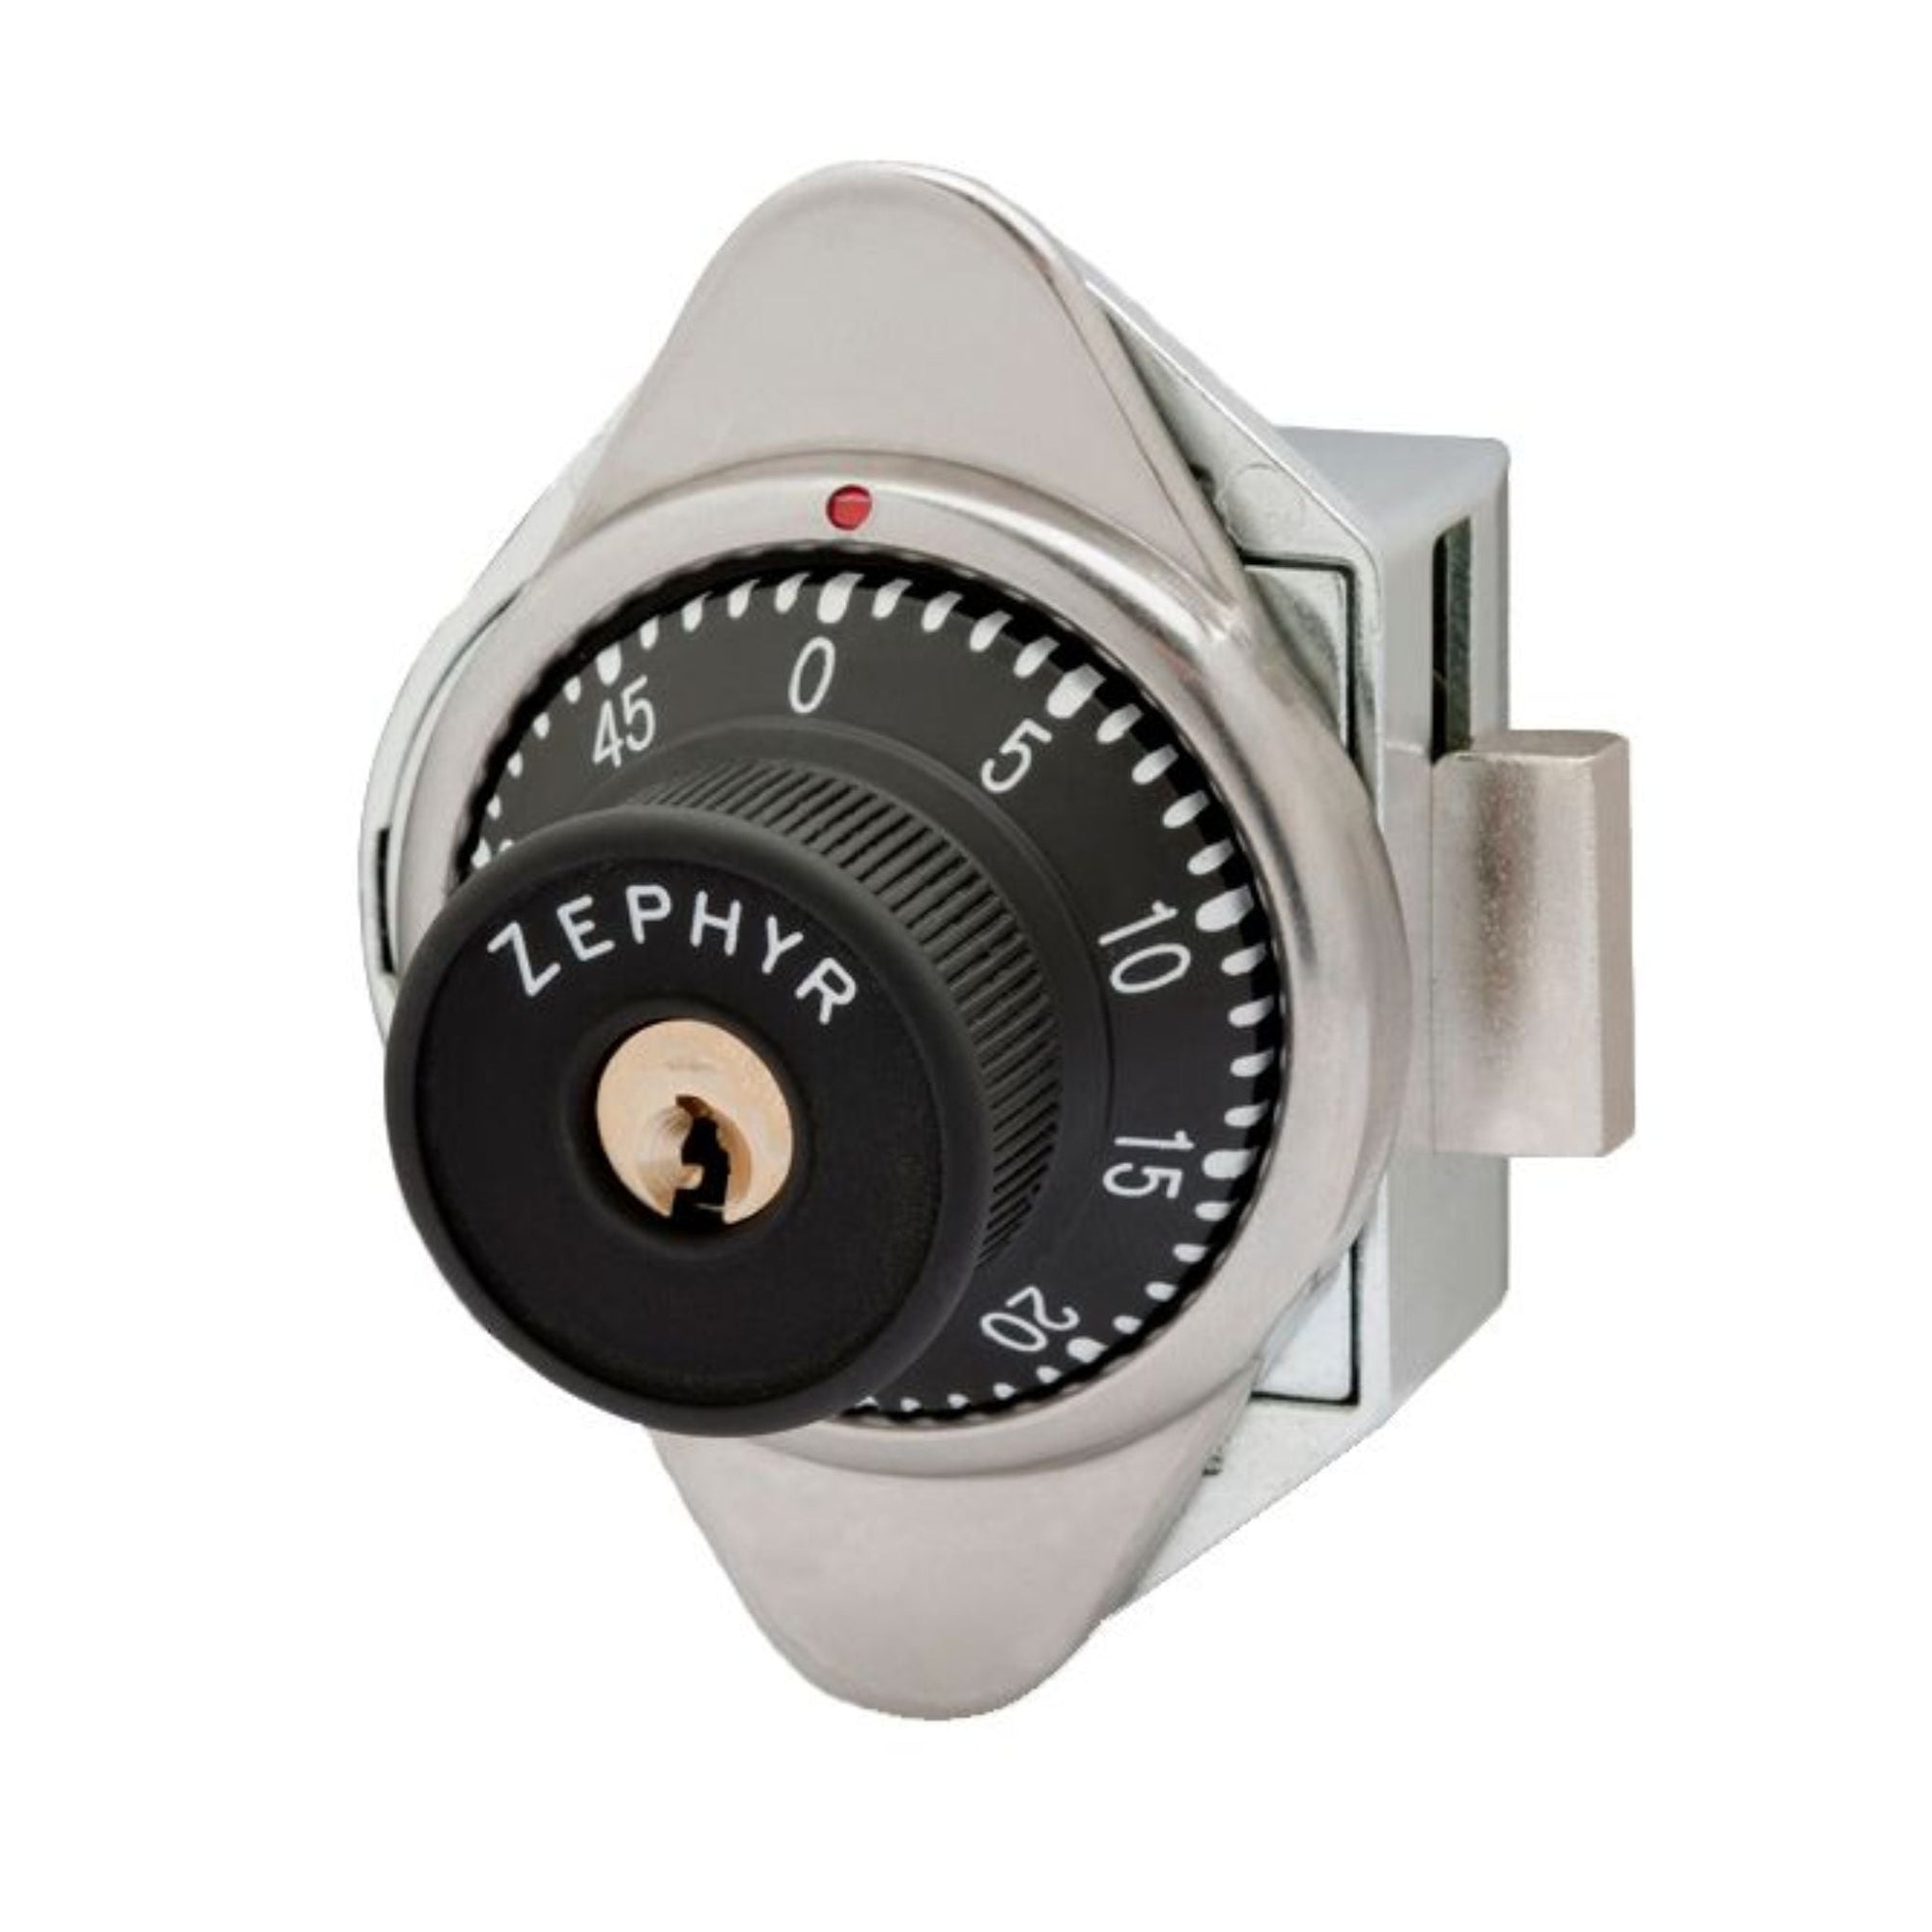 Zephyr Lock 1931 LH Combination Locker Padlock Fits Gravity Style and Multi Point Lockers - The Lock Source